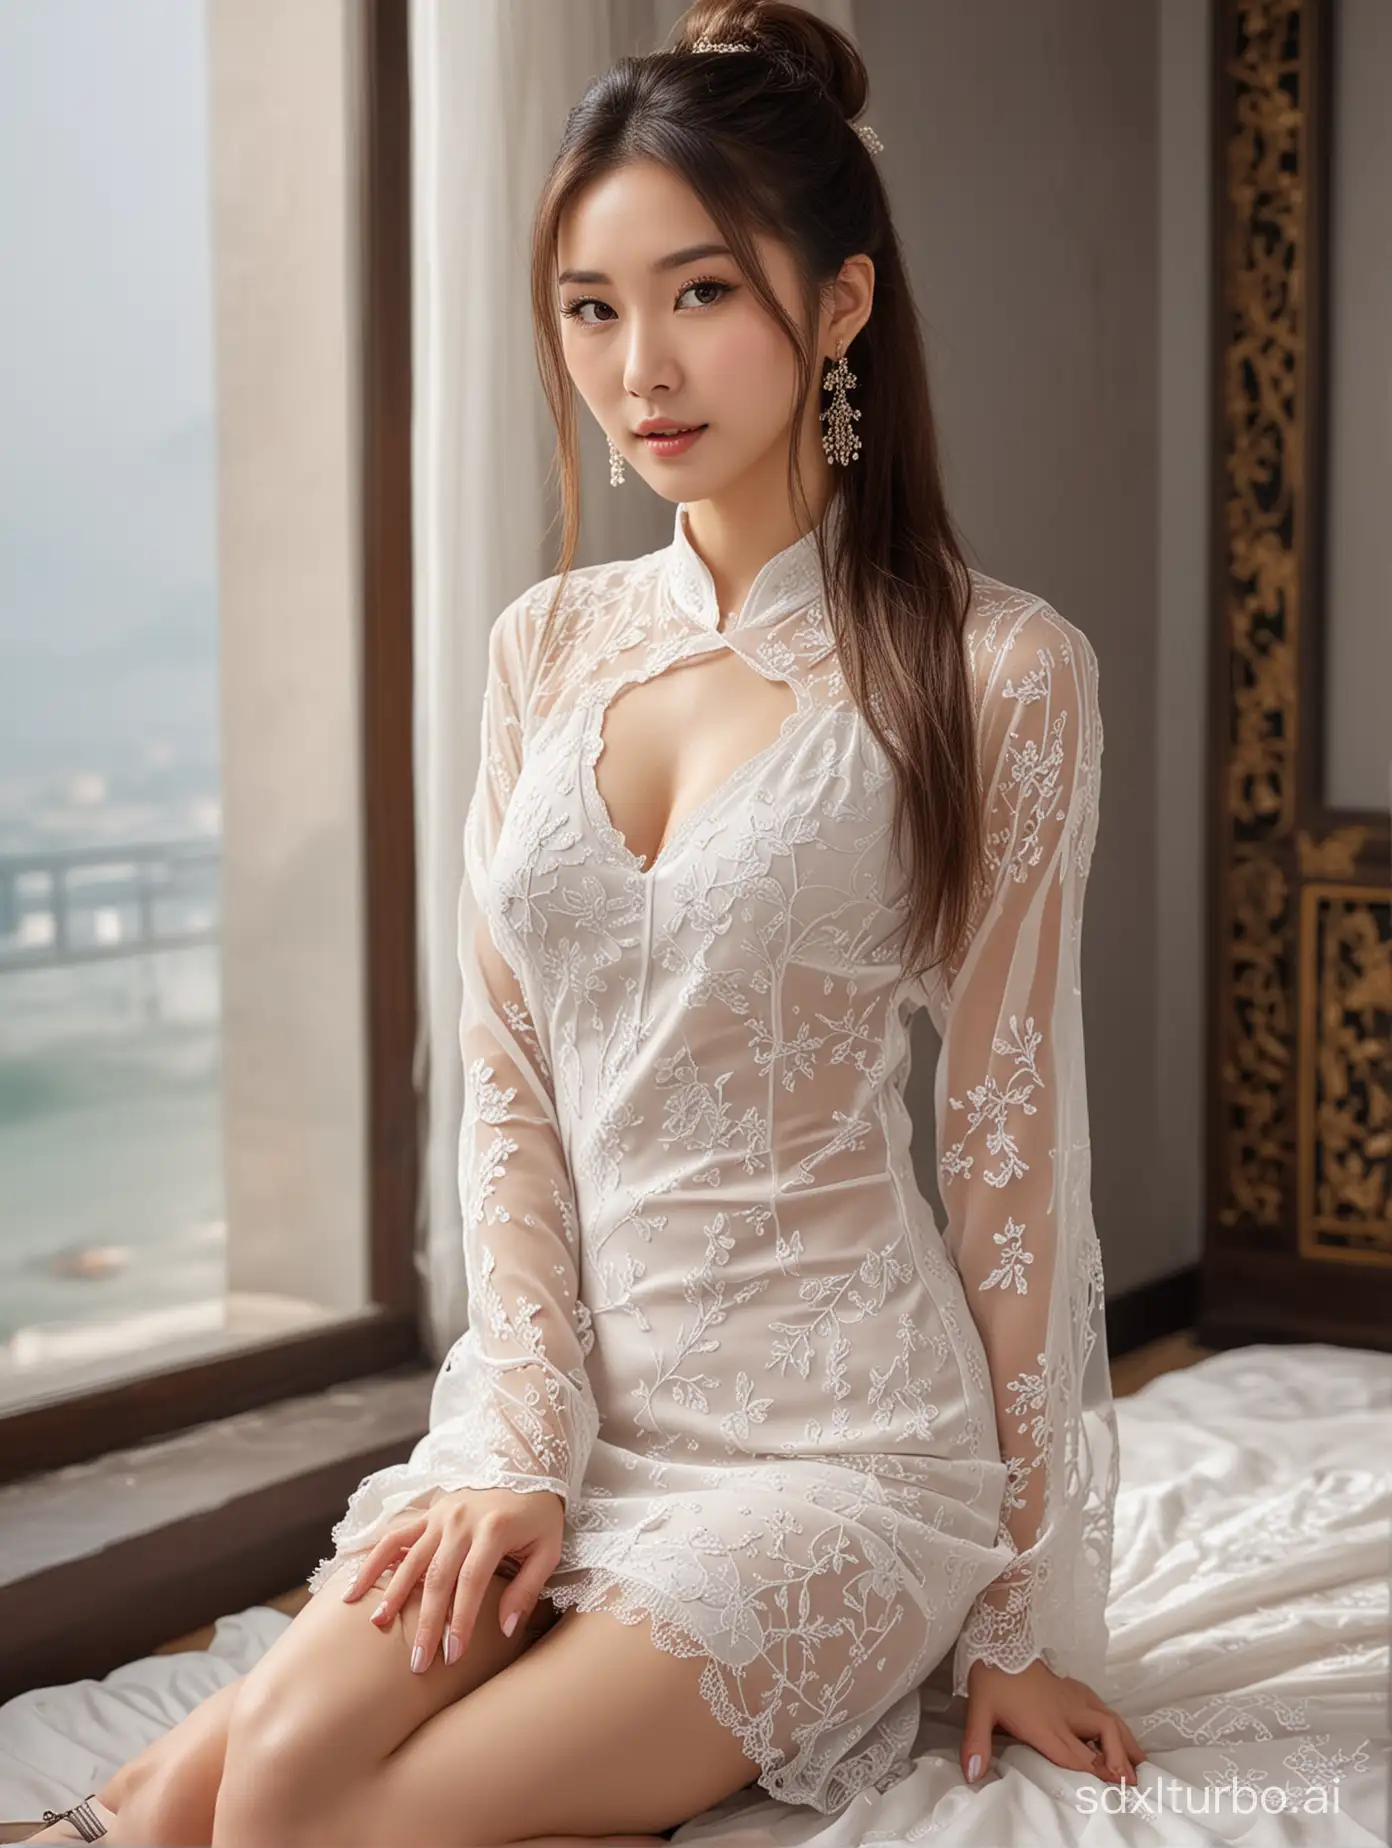 Elegant-Oriental-Beauty-in-Delicate-Dress-and-High-Heels